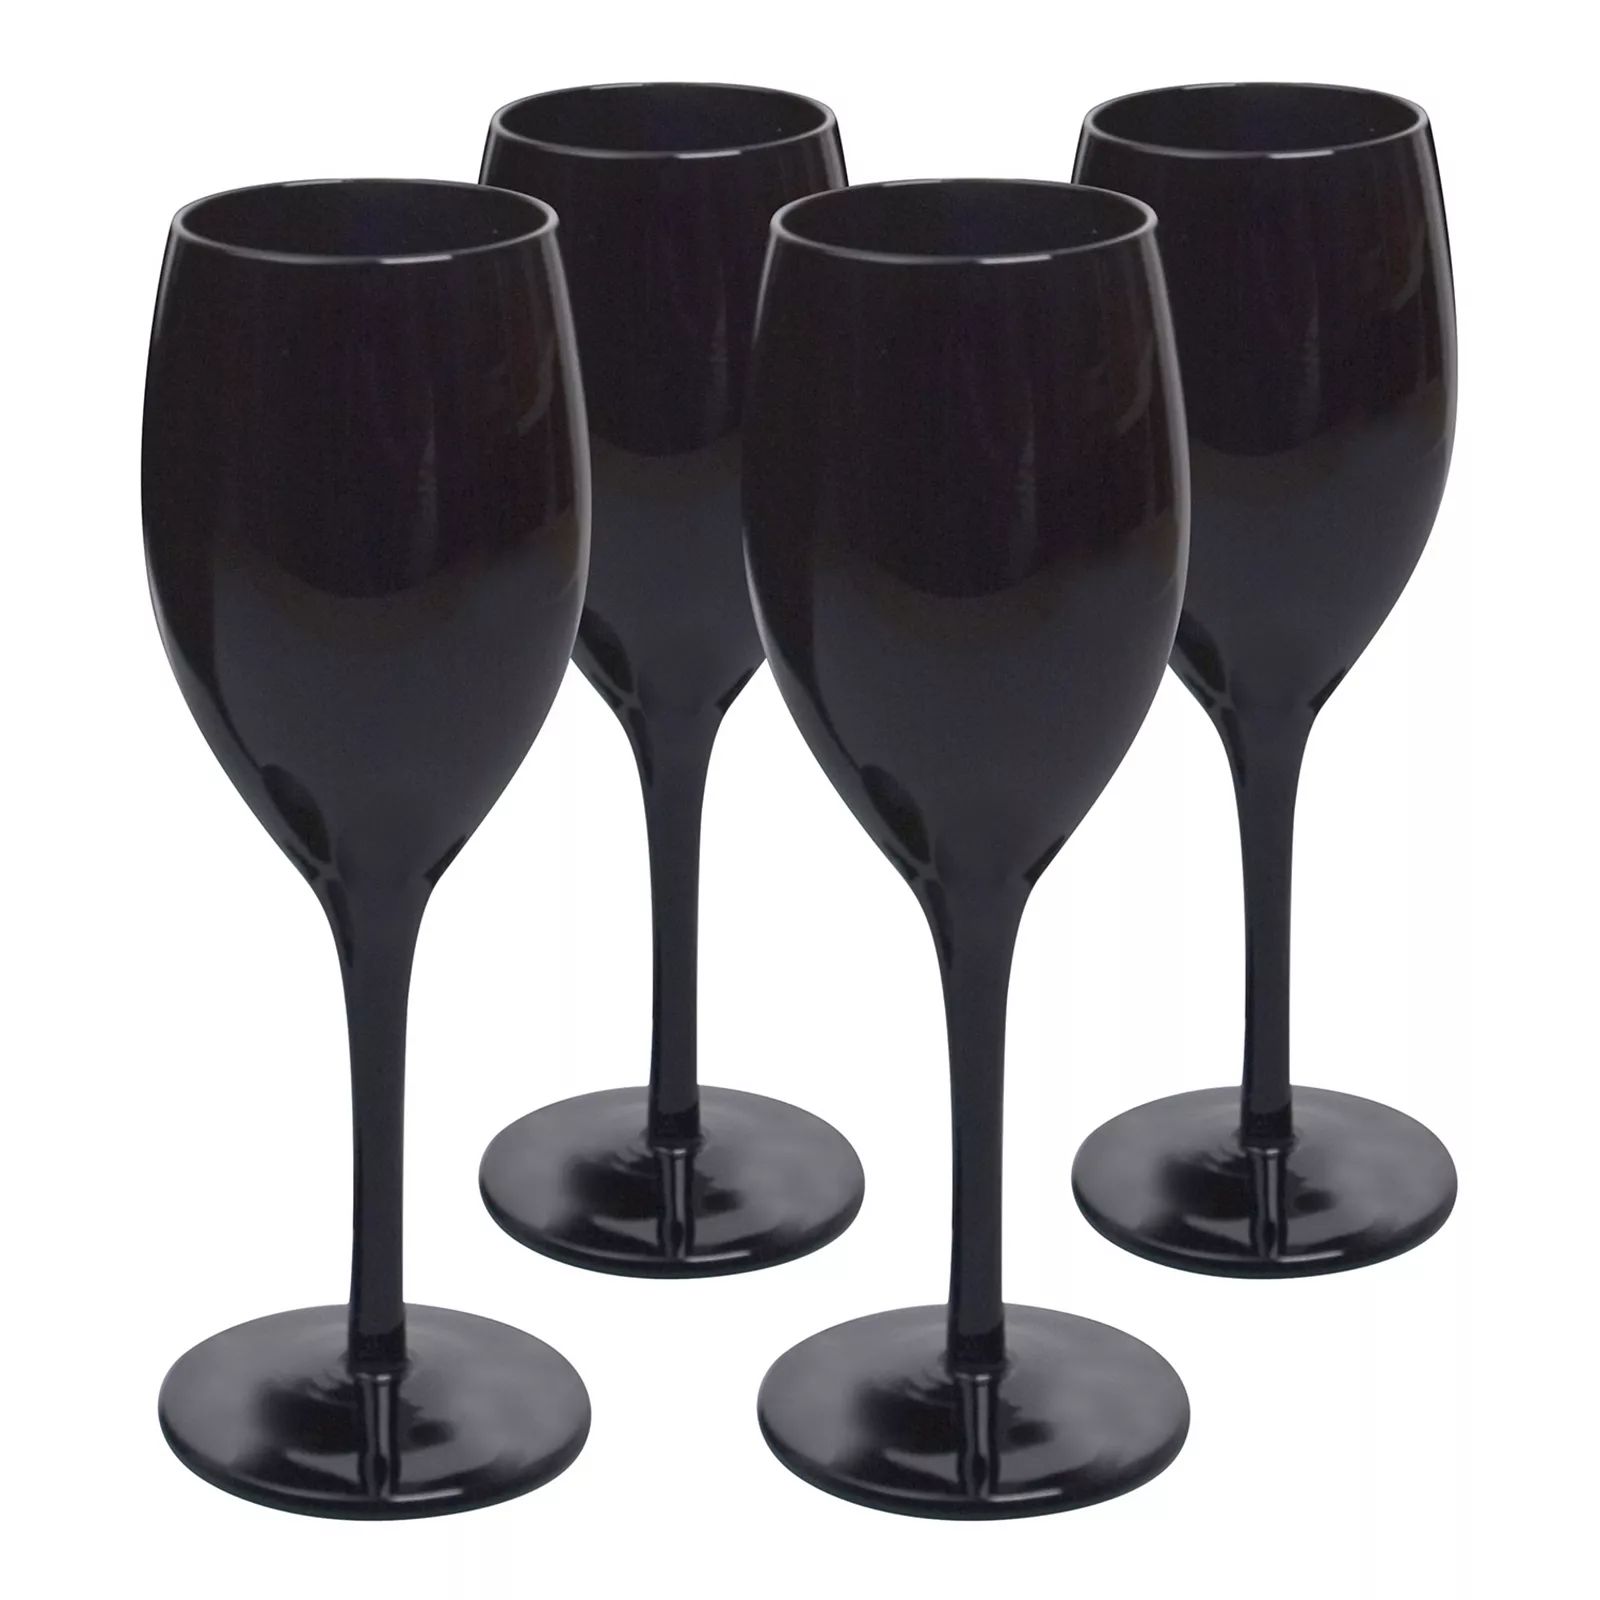 Artland 4-pc. Midnight Black Wine Glass Set | Kohl's